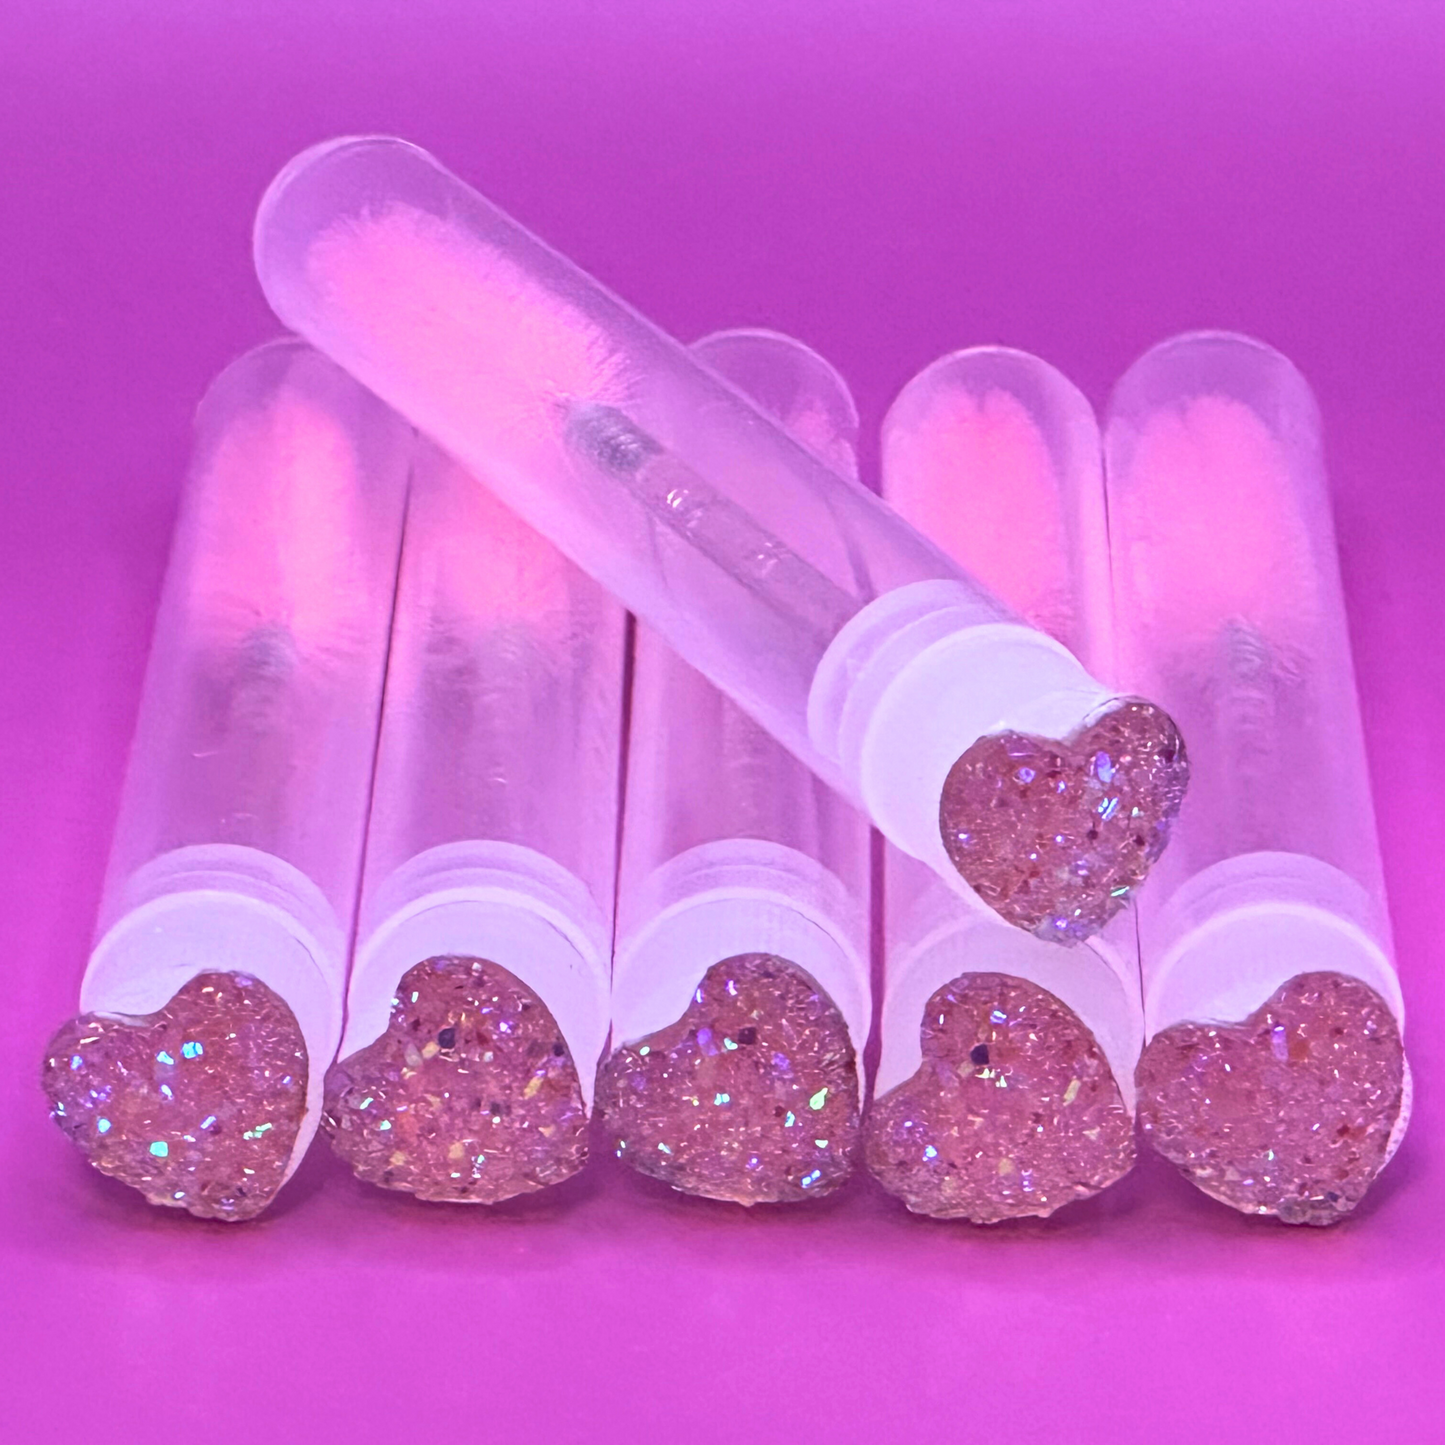 Glitter Eyelash Wands with Cover - Light pink glittery heart